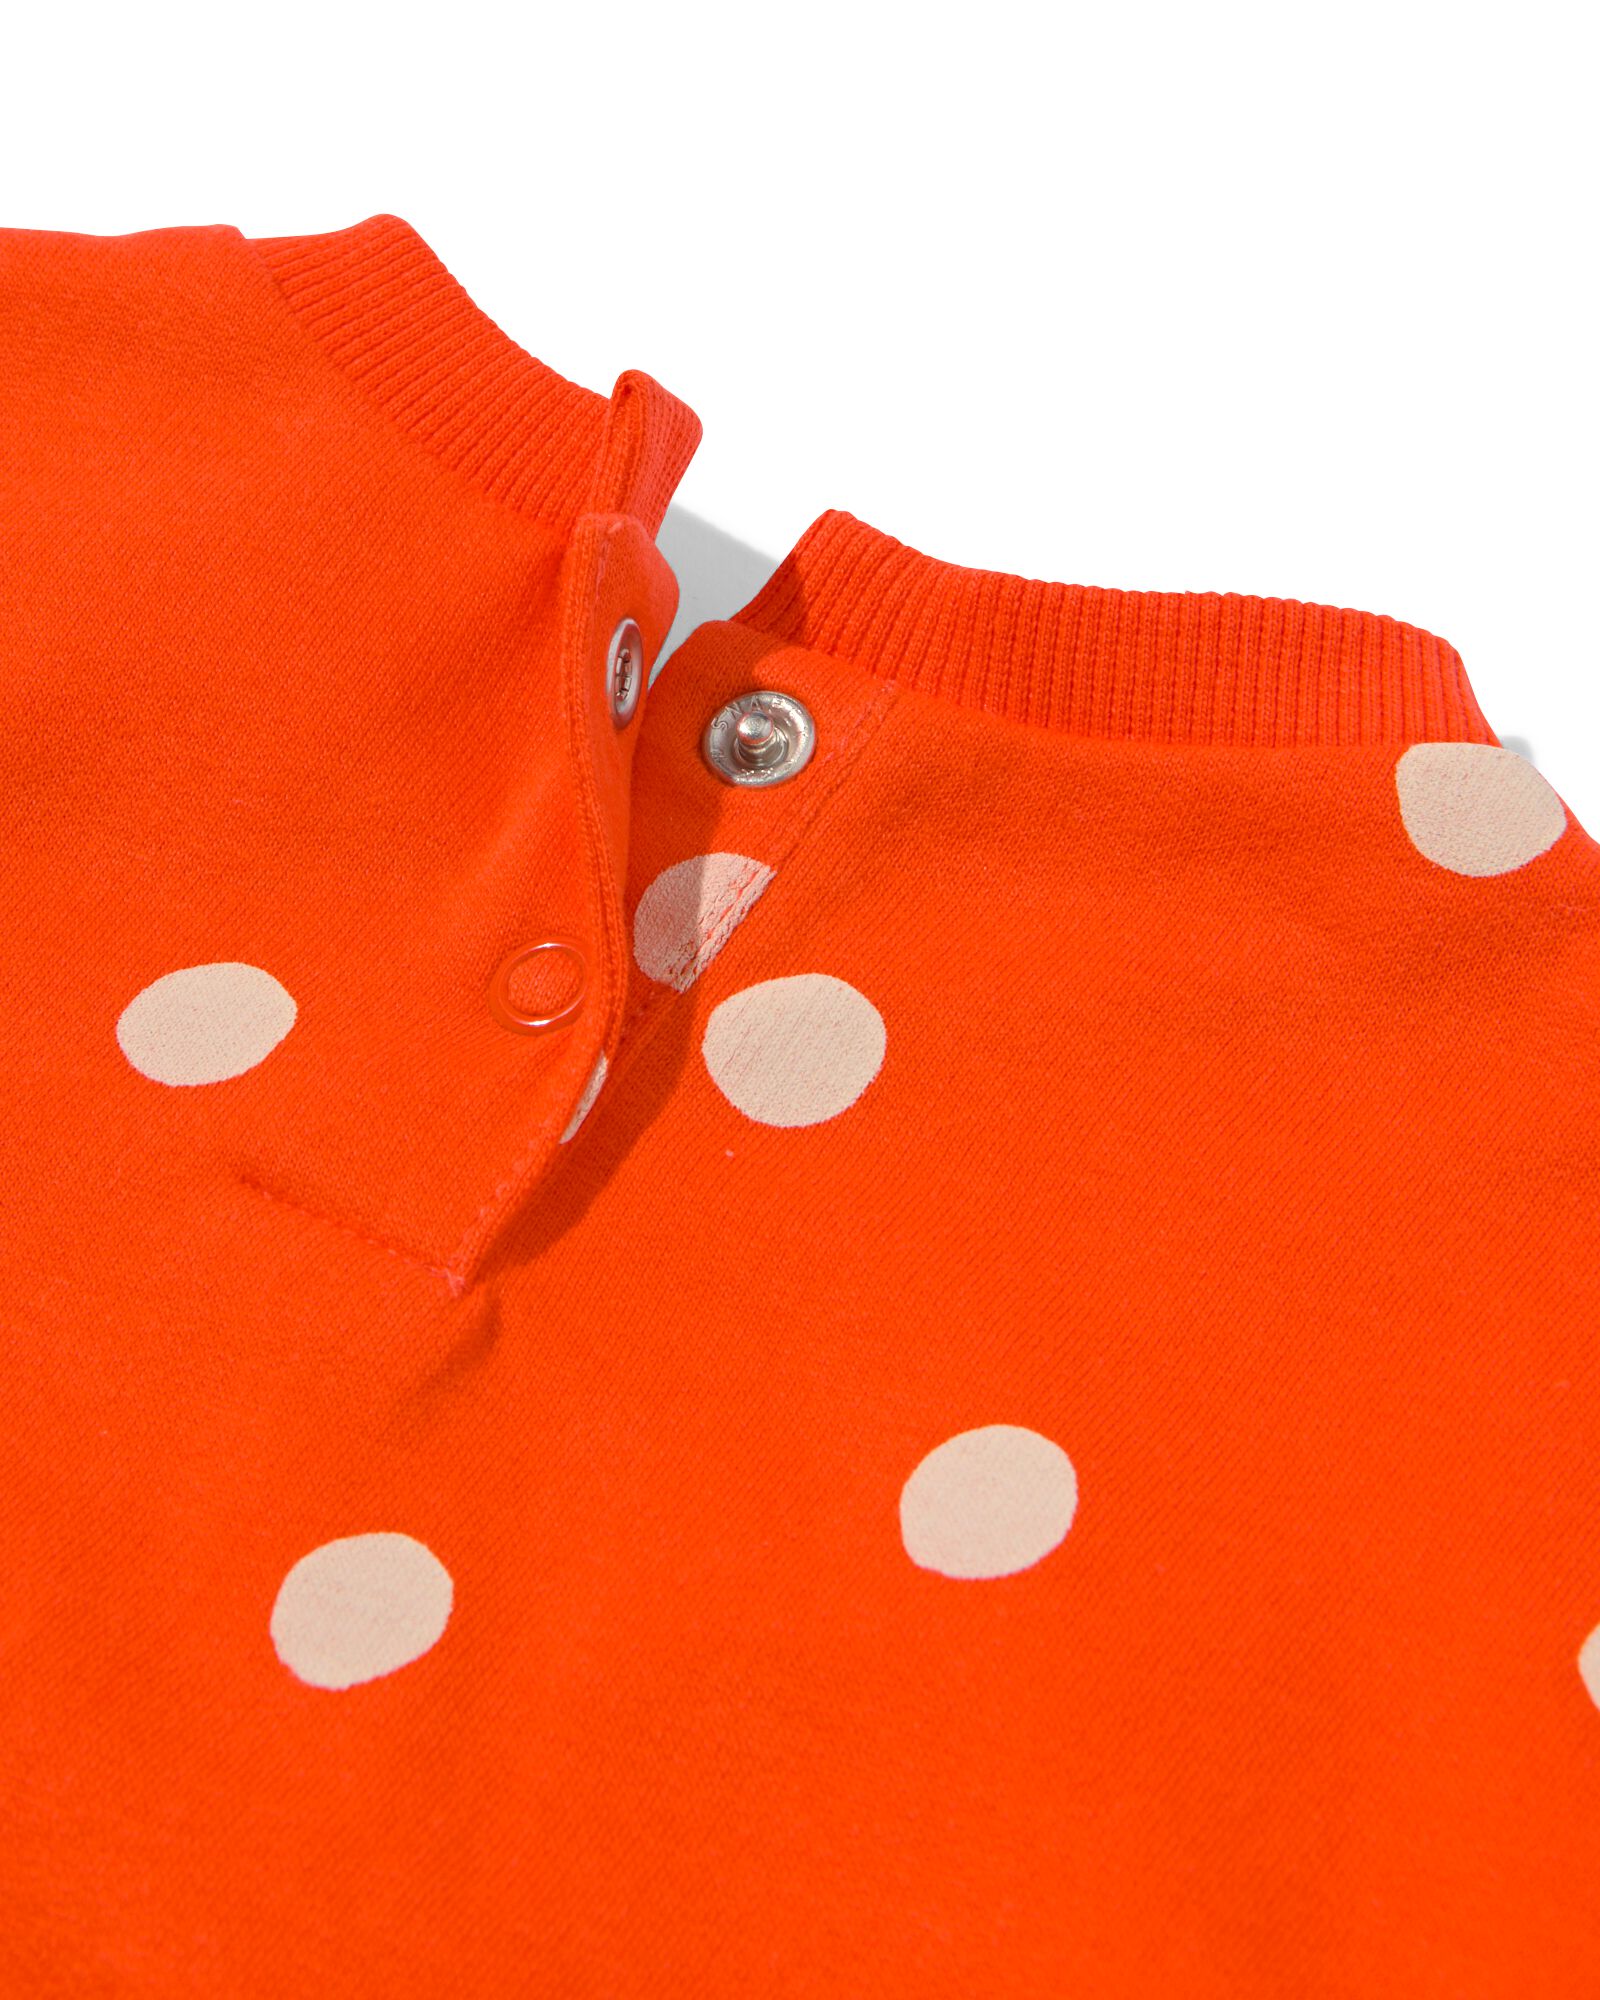 baby sweater stippen oranje 92 - 33002456 - HEMA